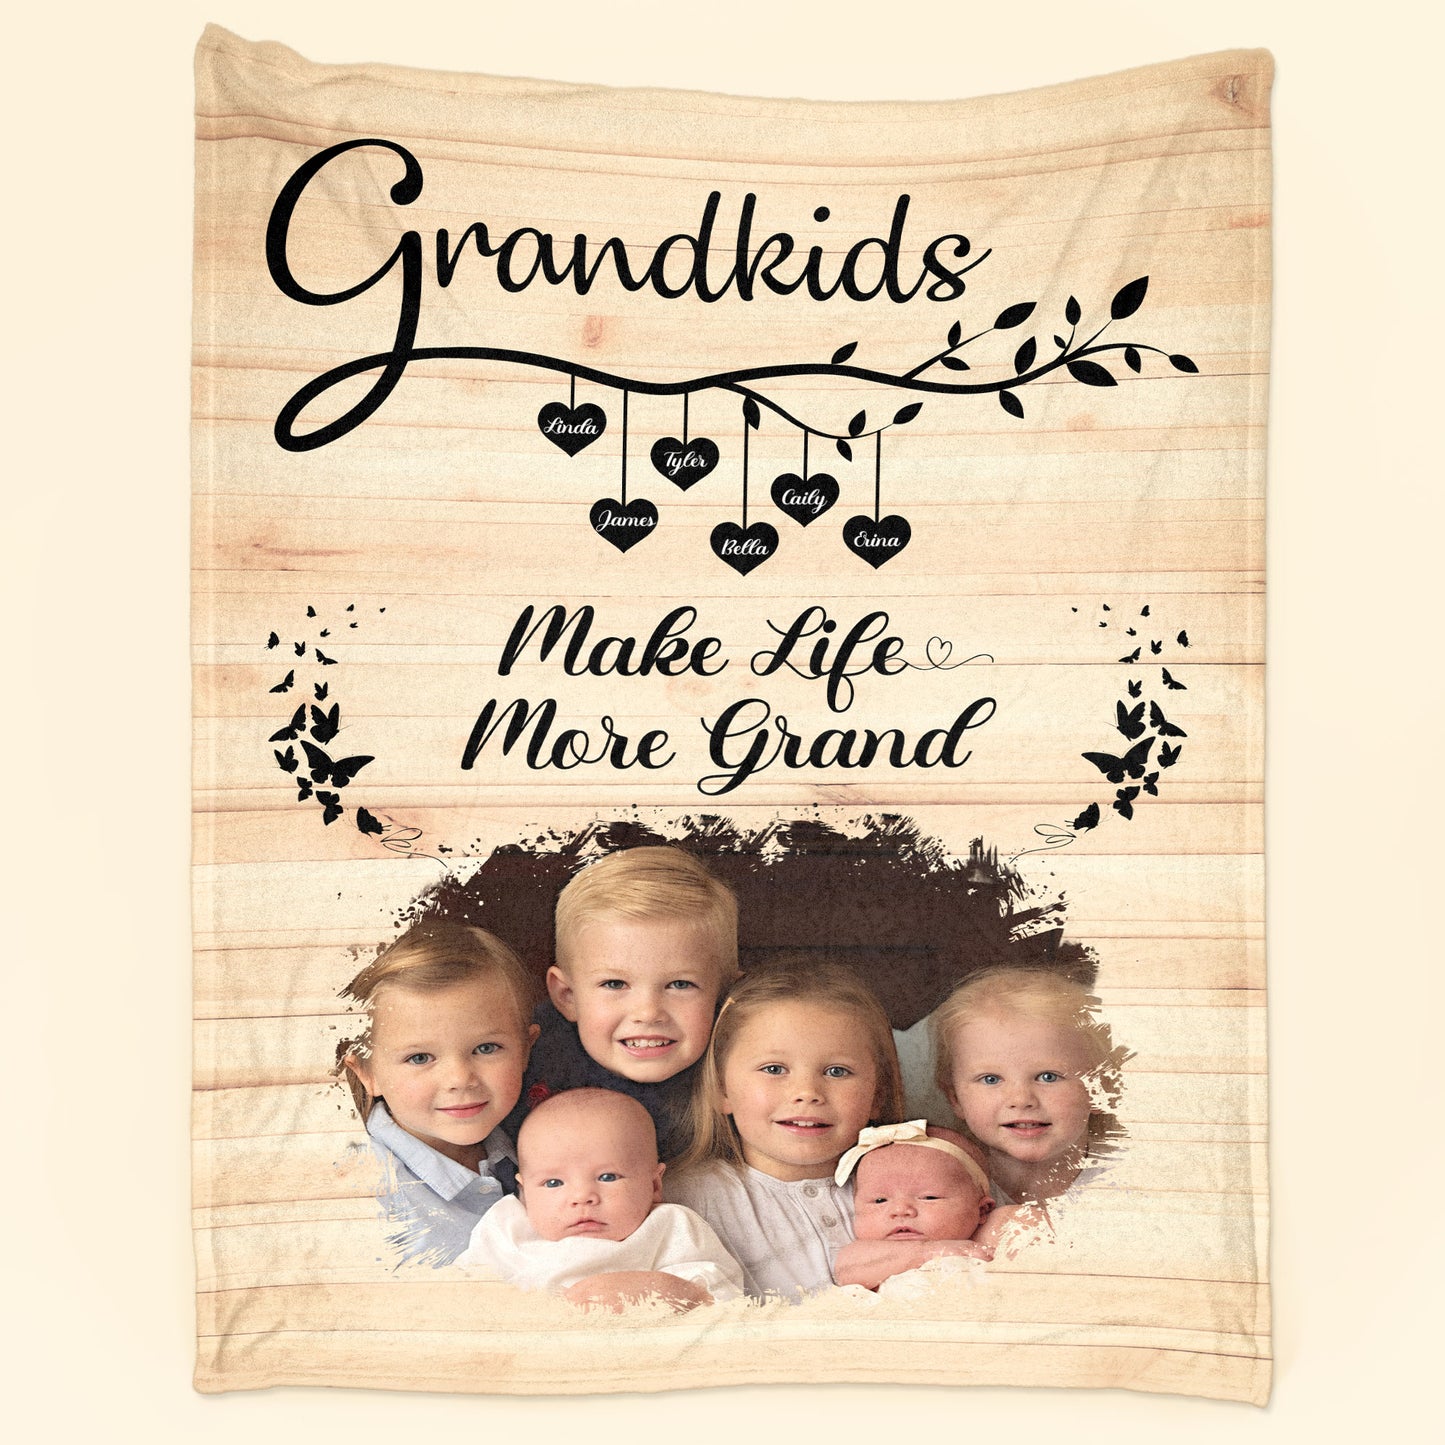 Grandkids Make Life More Grand - Personalized Photo Blanket